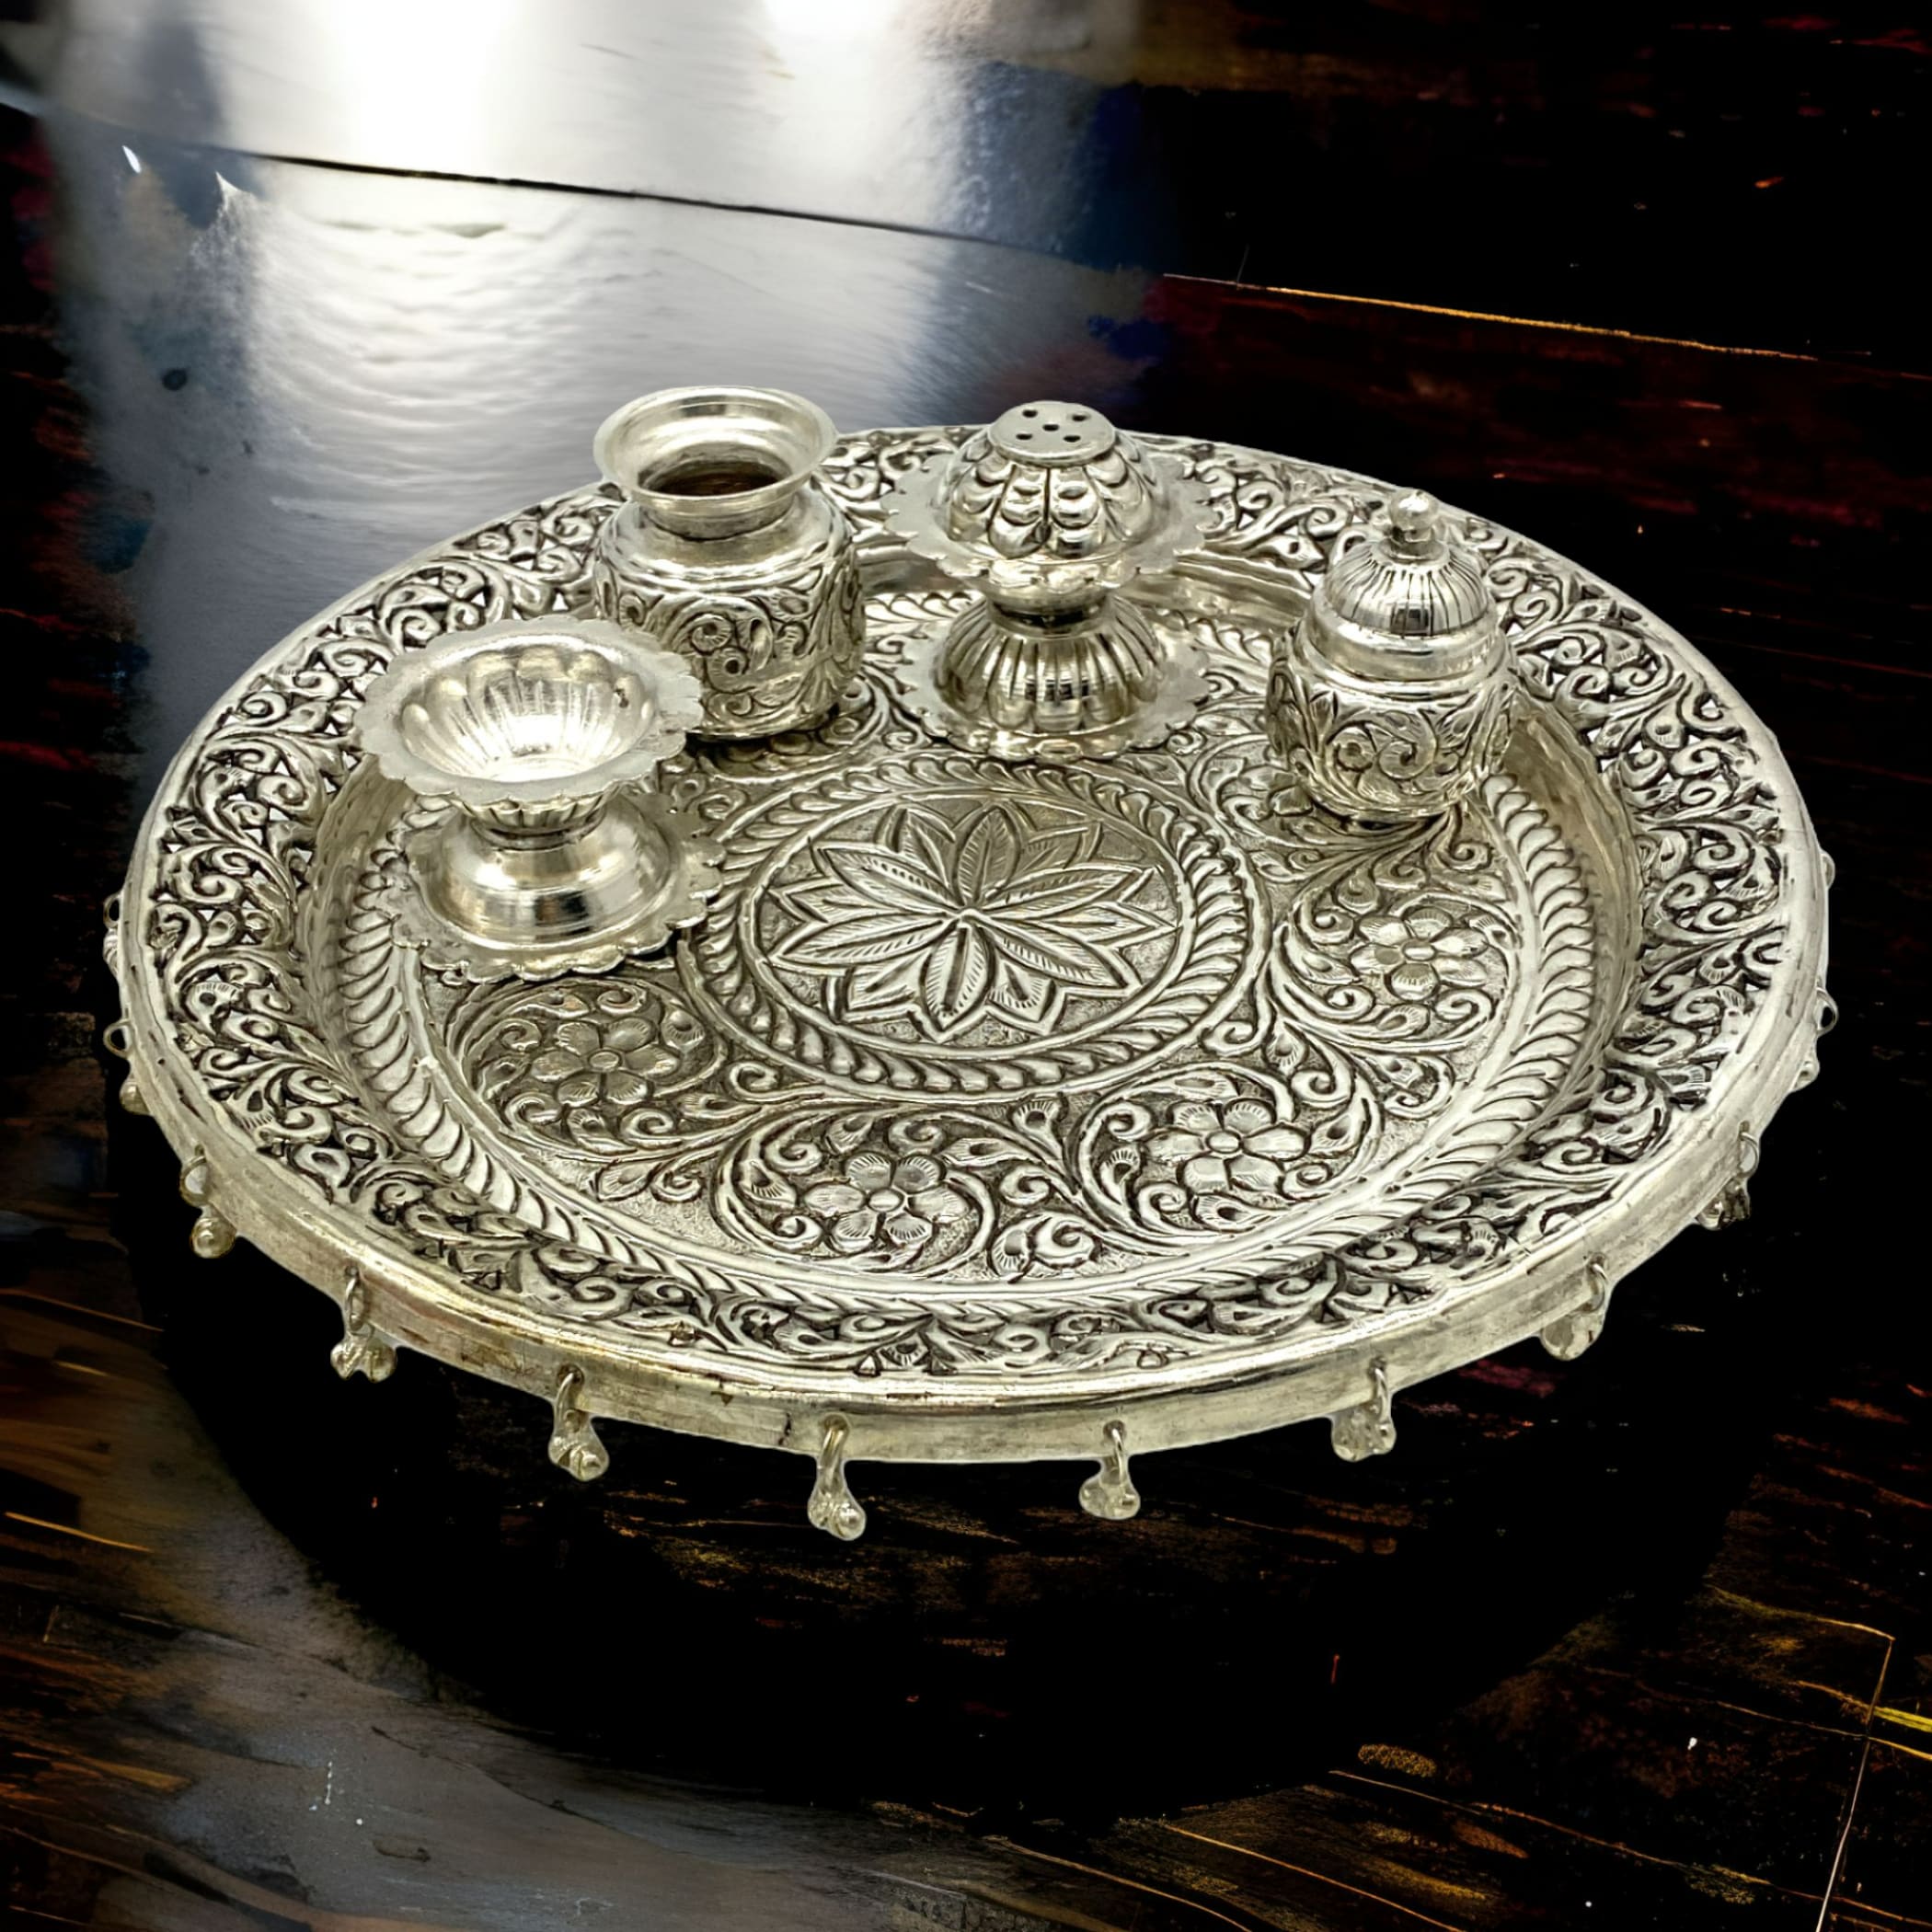 Hashcart Pooja Brass Plate Set (Dia - 8.85 in), Indian Decorative Puja  Items/Aarti Thali for Home Mandir, Temple, Diwali Decoration, Wedding